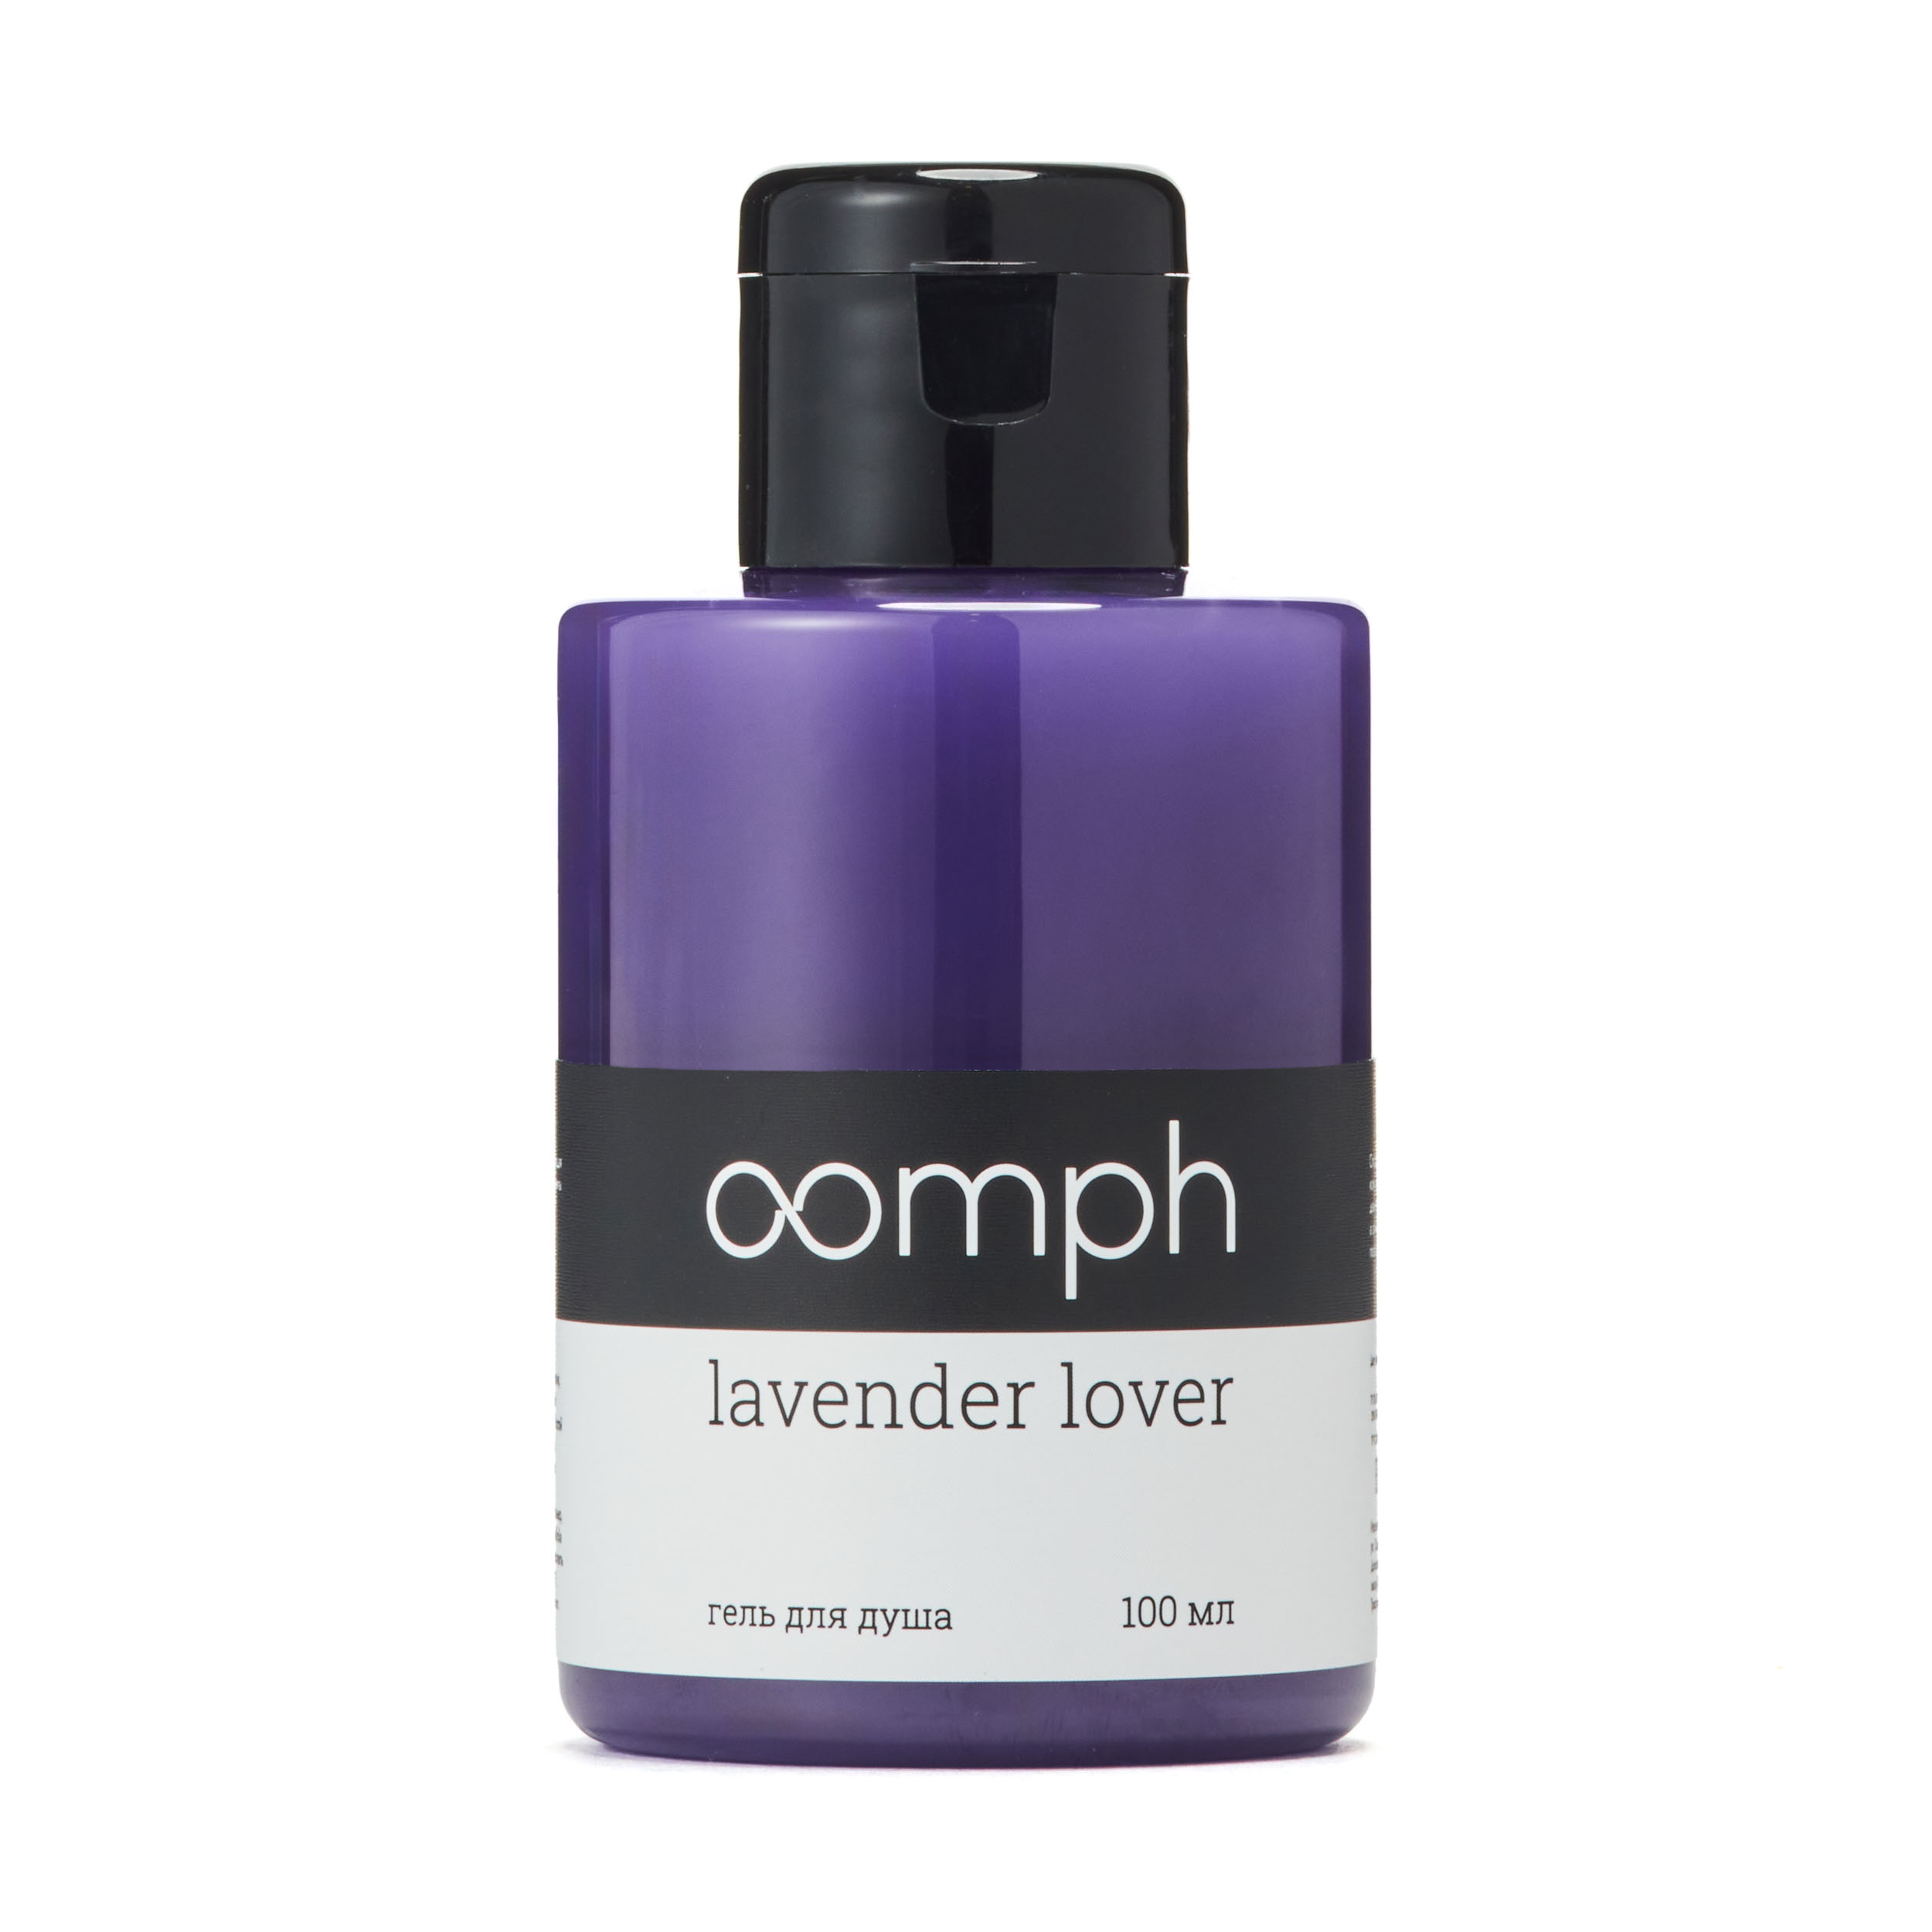 Гель для душа OOMPH Lavender Lover 100мл french lover